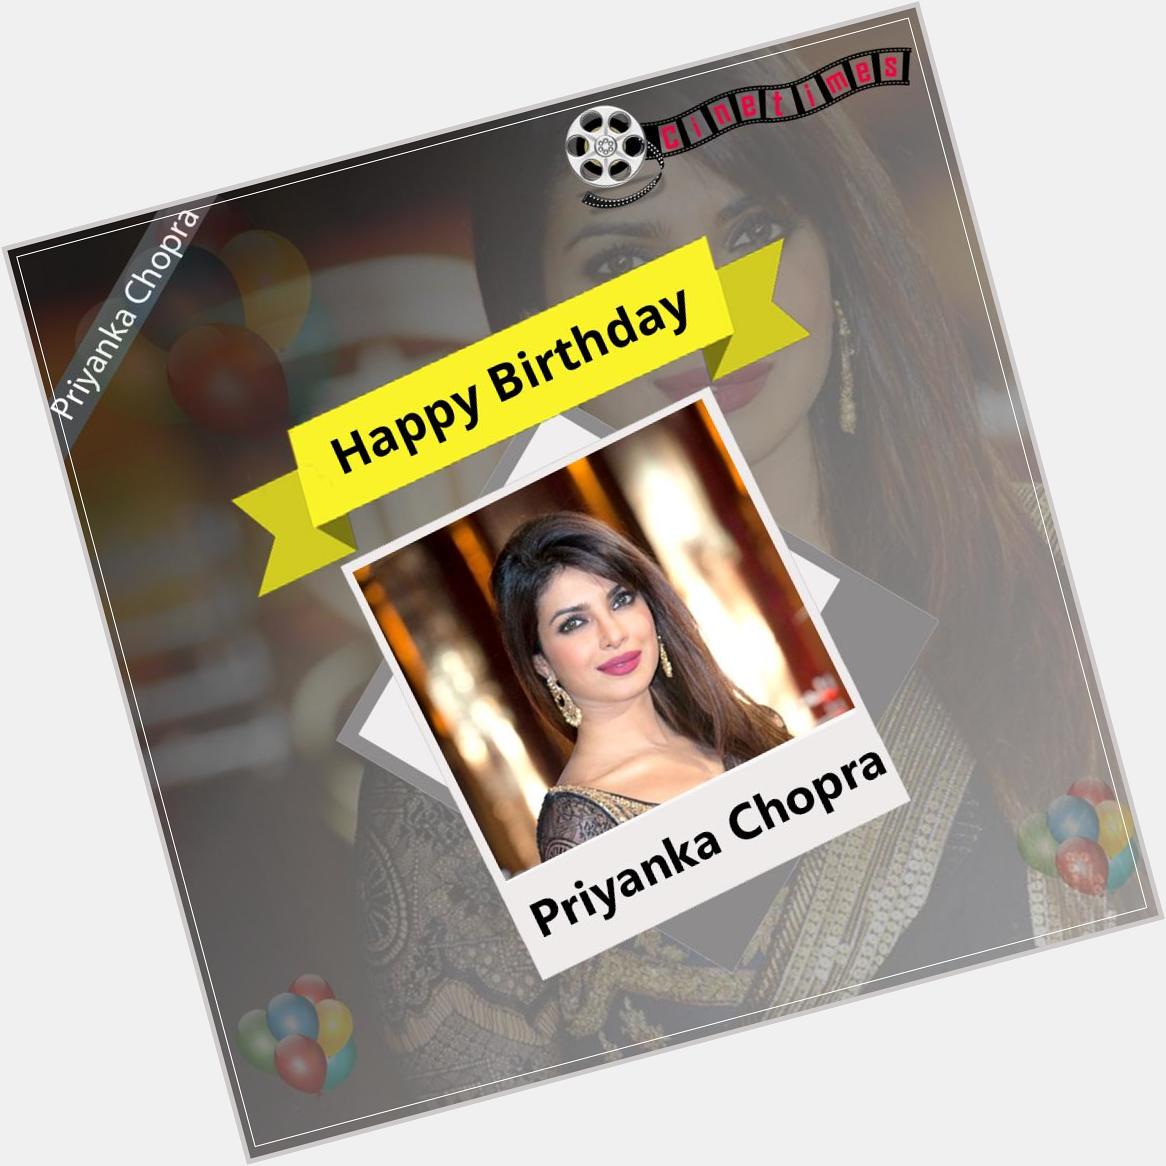 Join us in Wishing Actress, Singer Priyanka Chopra A Very Happy Birthday 